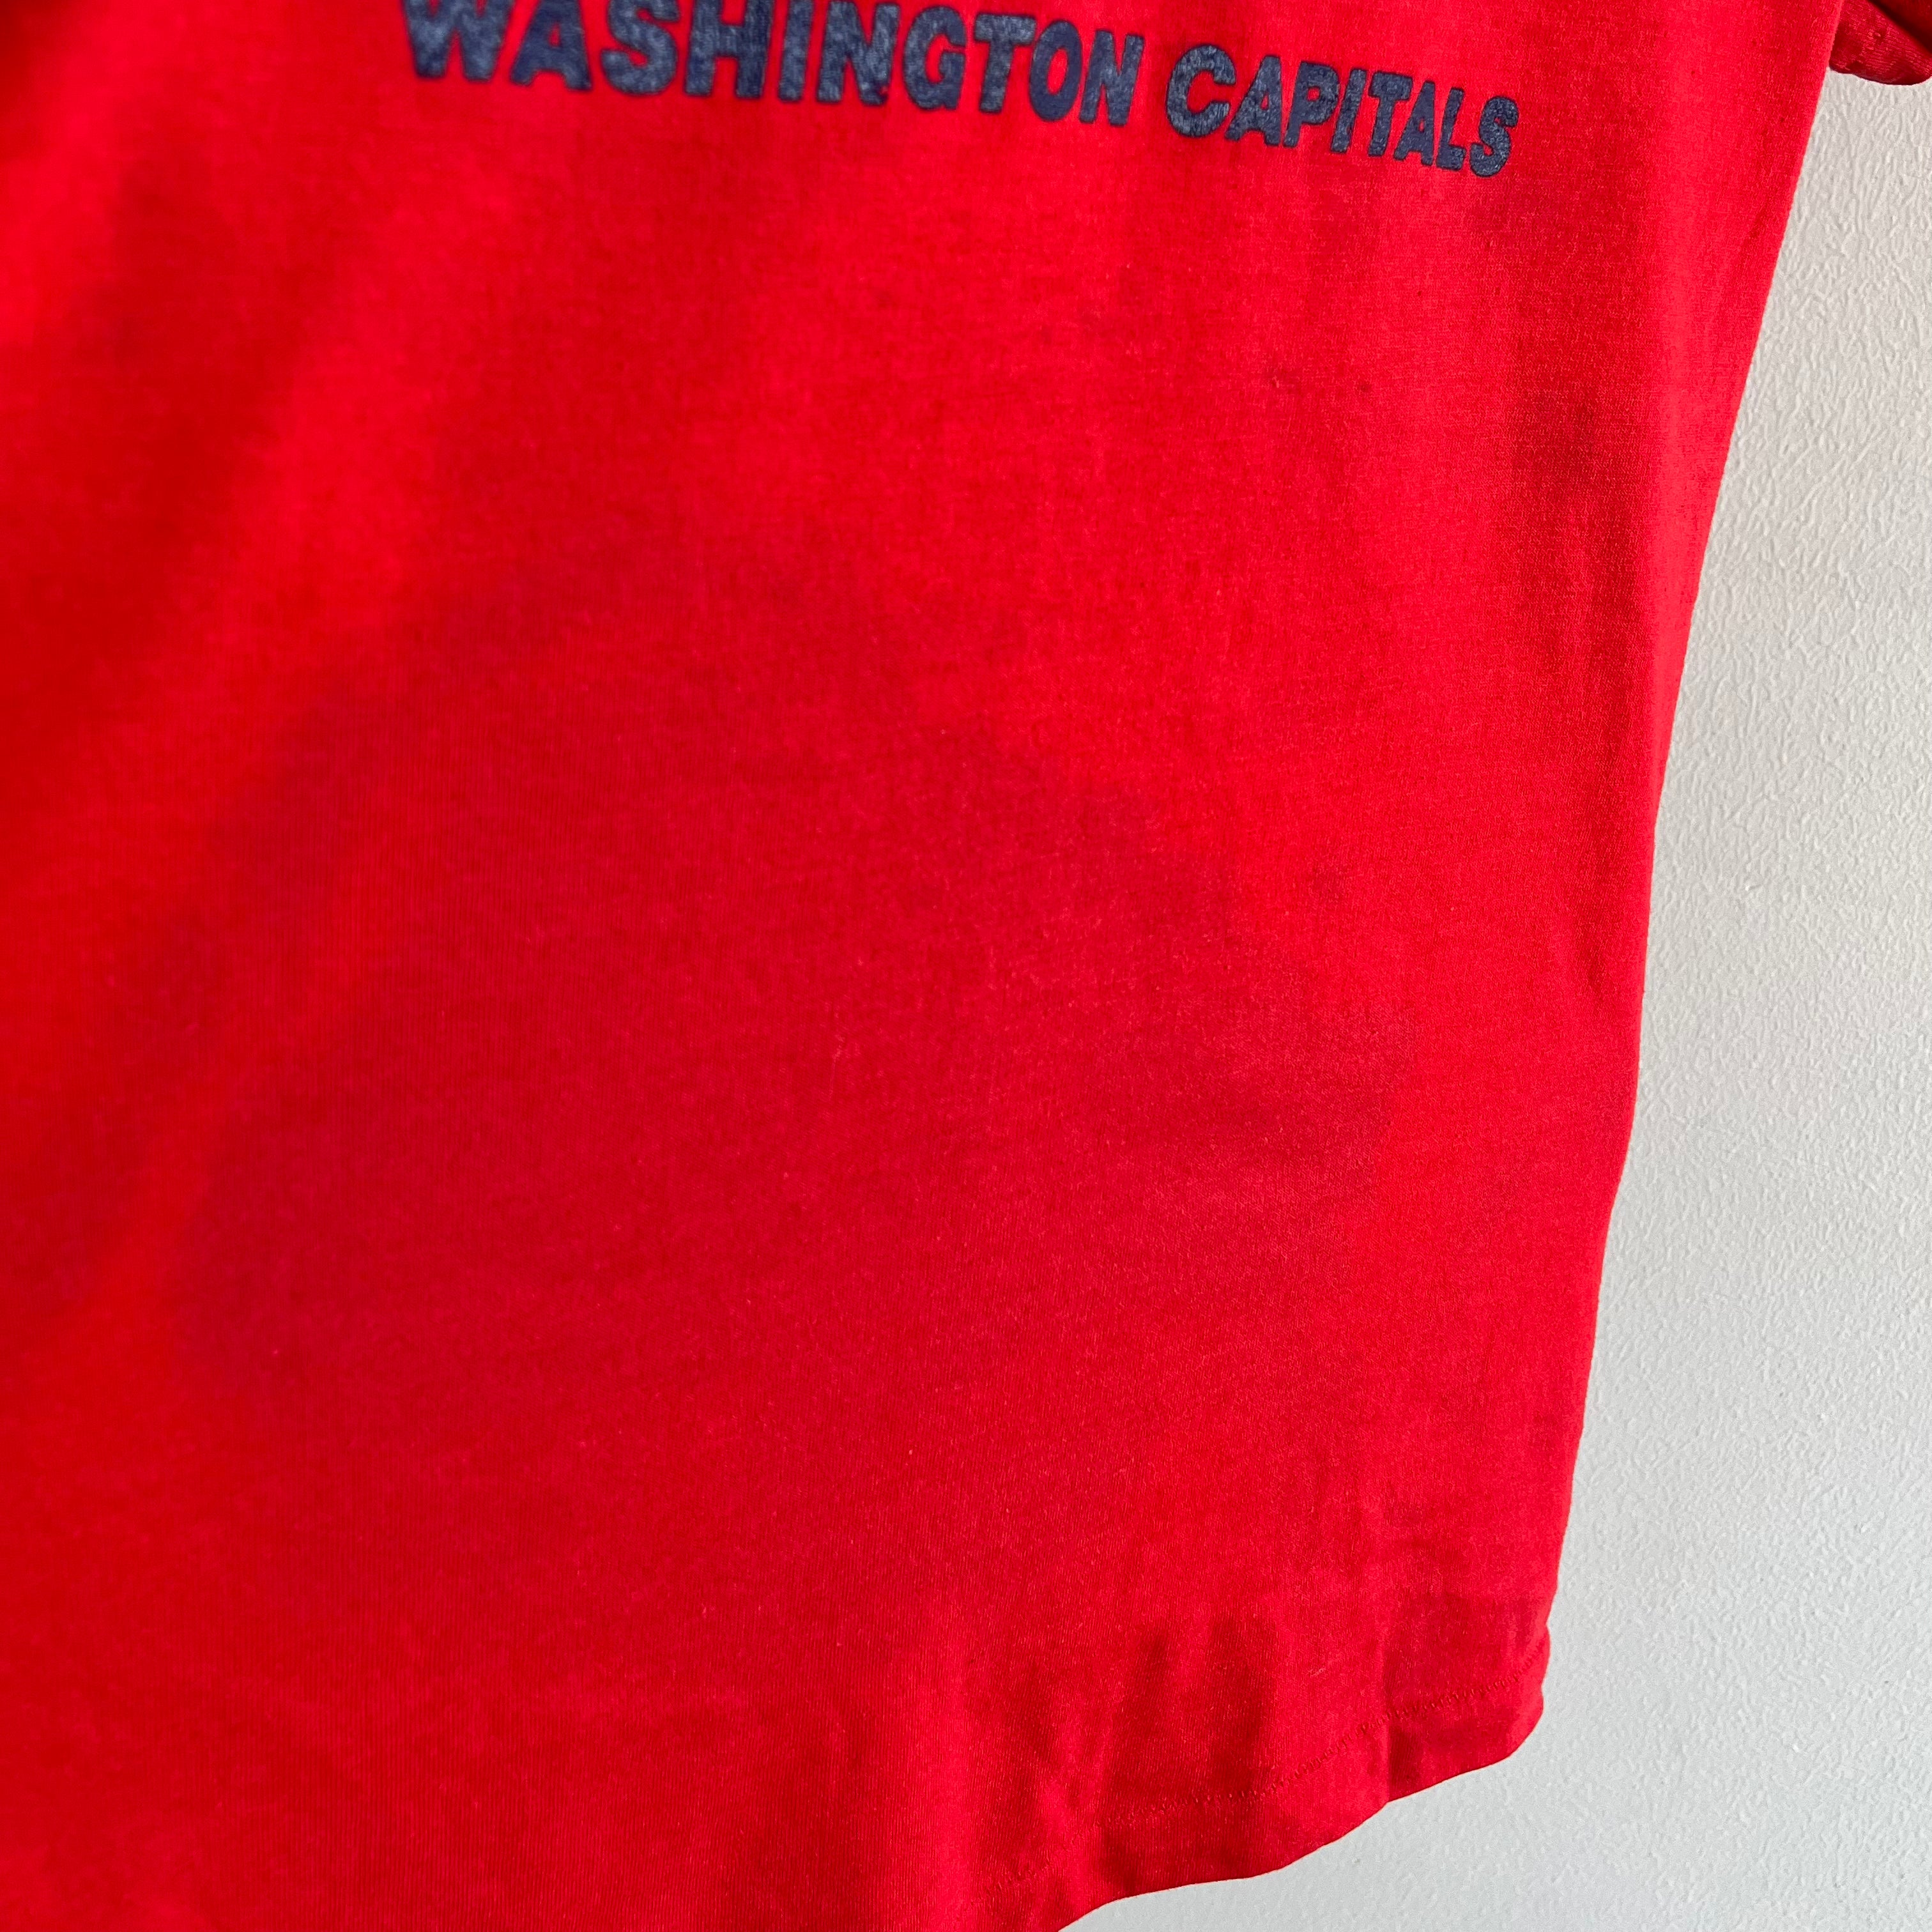 1980s Washington Capitals NHL T-Shirt